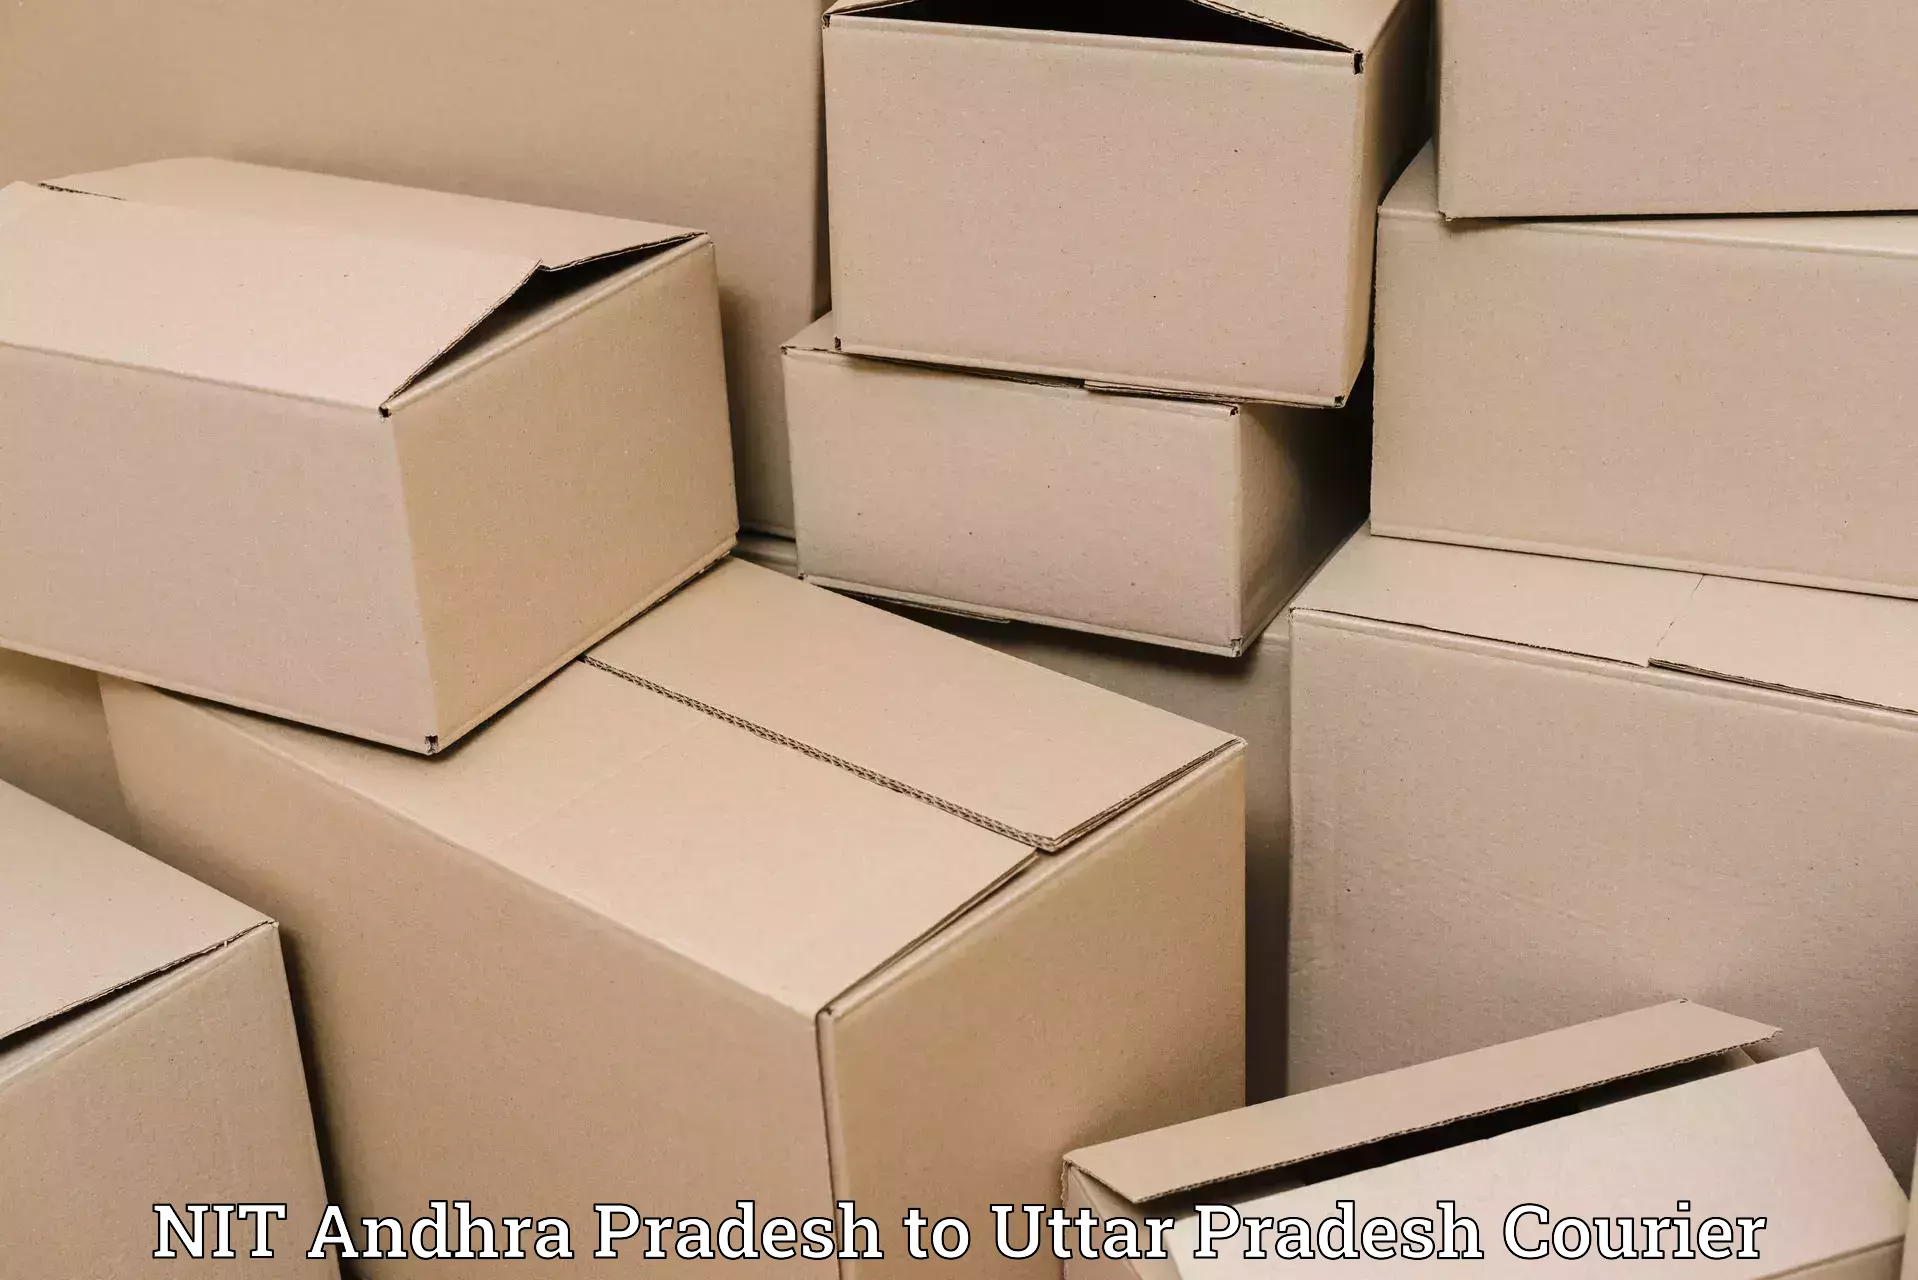 Cash on delivery service NIT Andhra Pradesh to Soraon